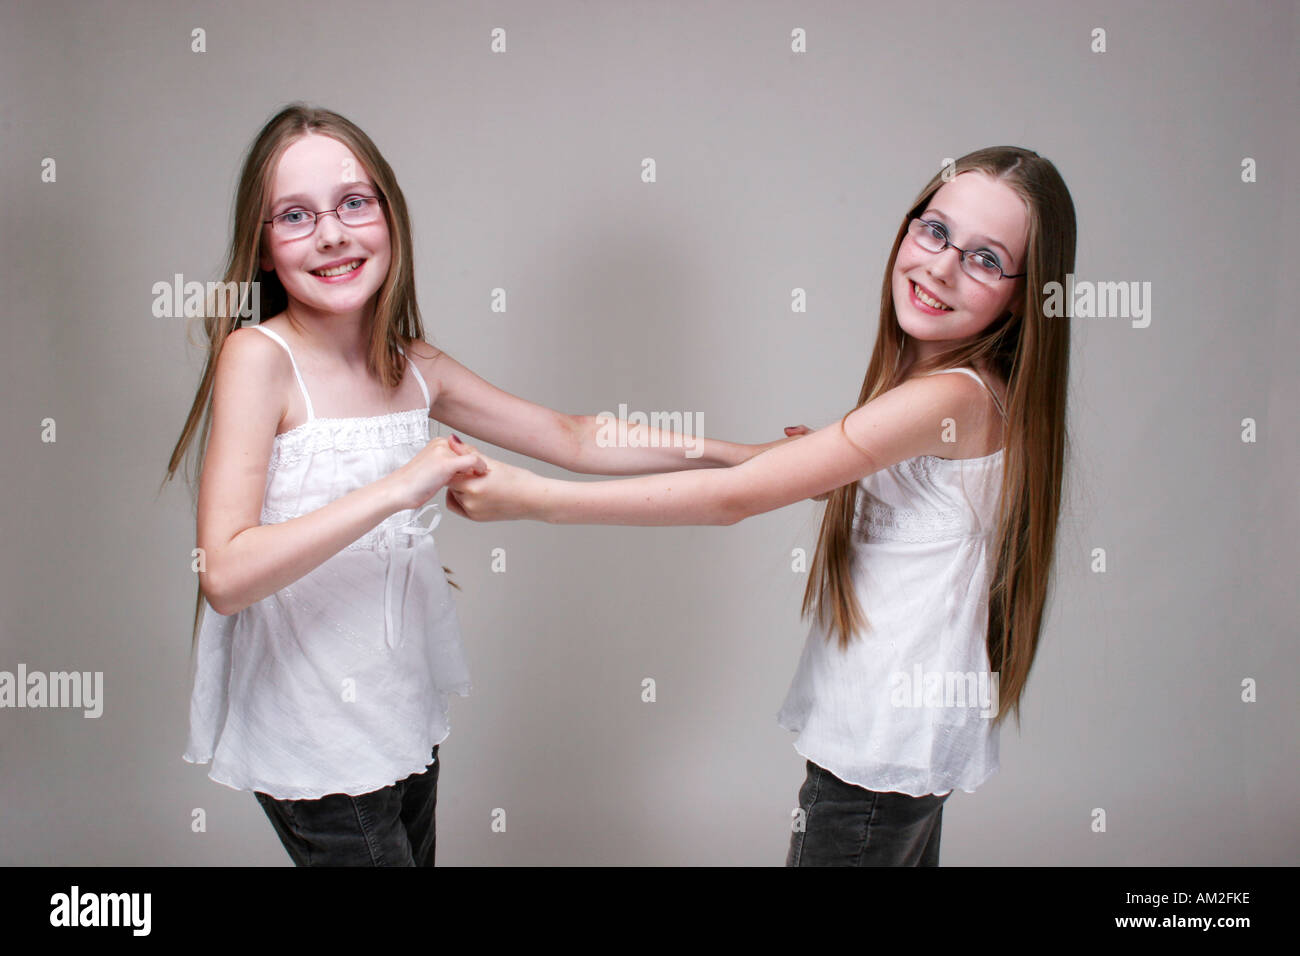 twin girl kid pose in white cutout background blond Caucasian European Stock Photo